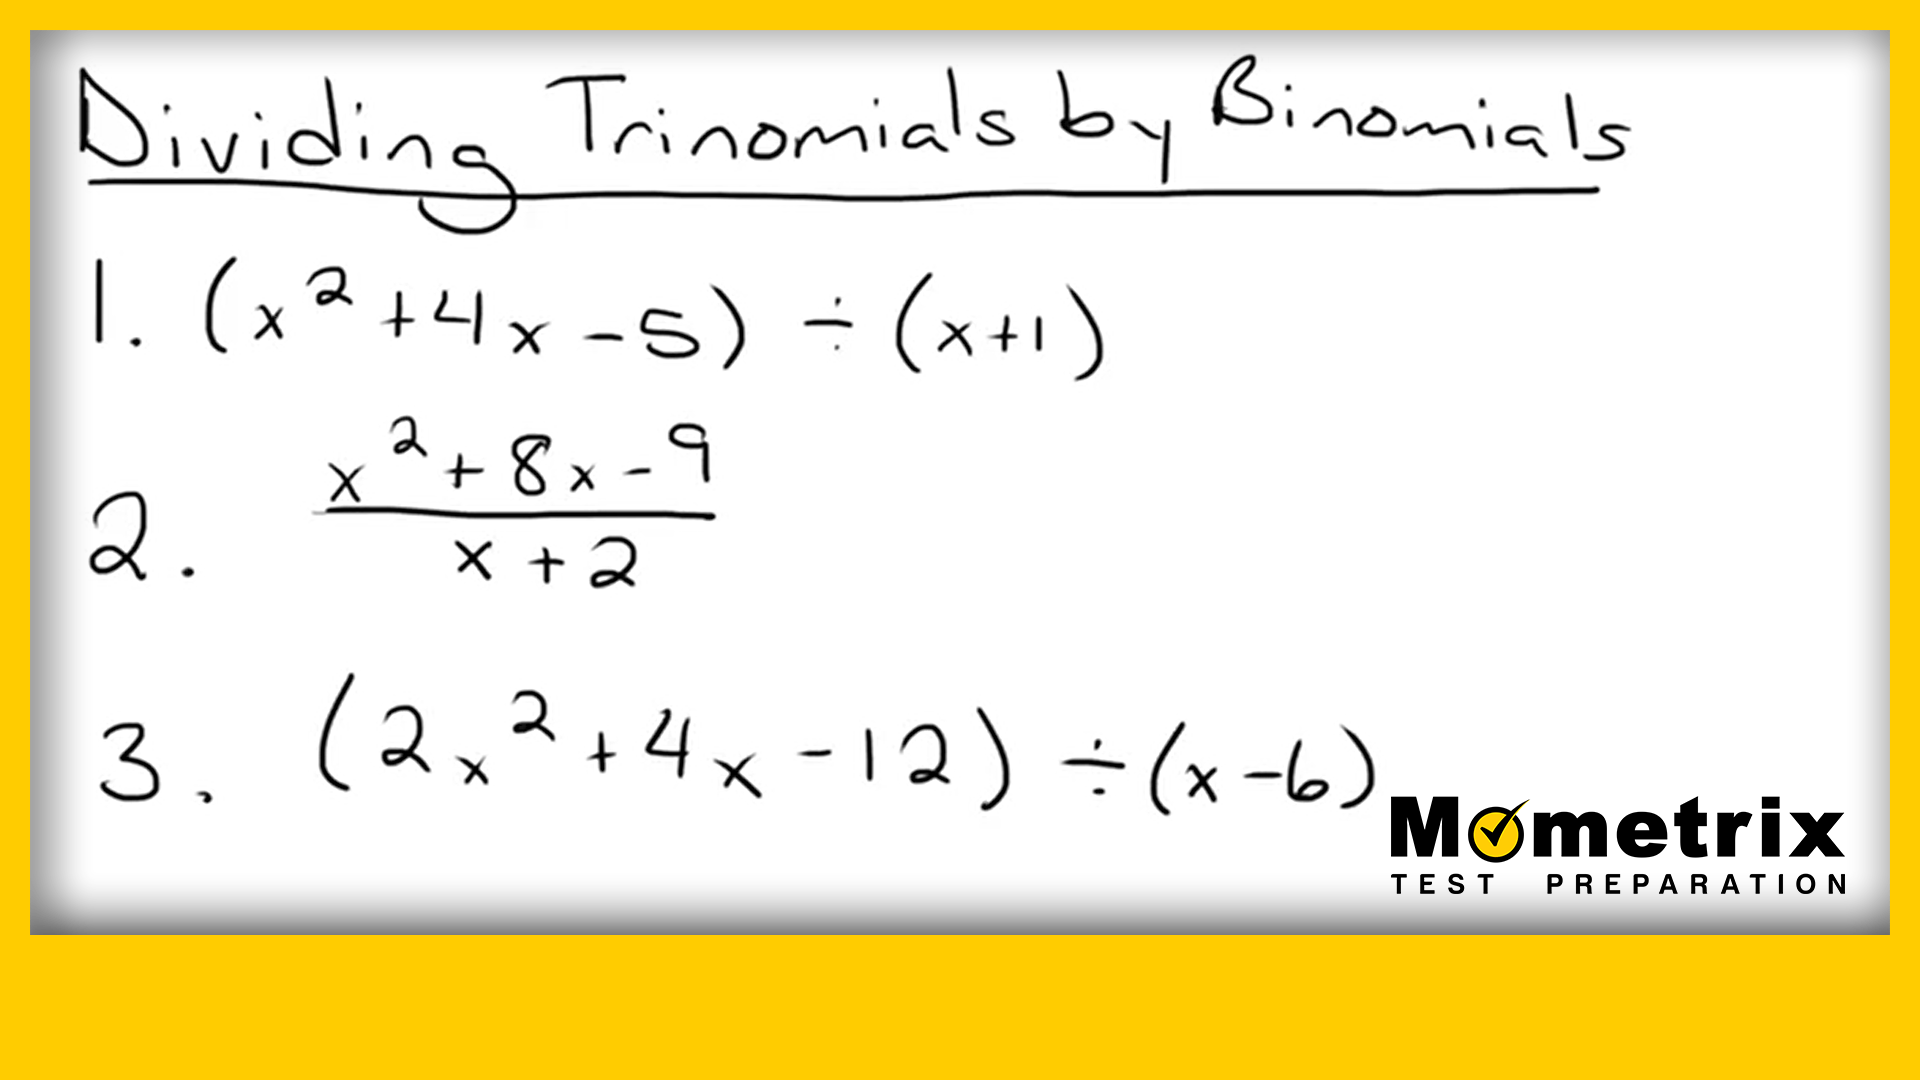 Dividing Trinomials By Binomials Pq Video 7668